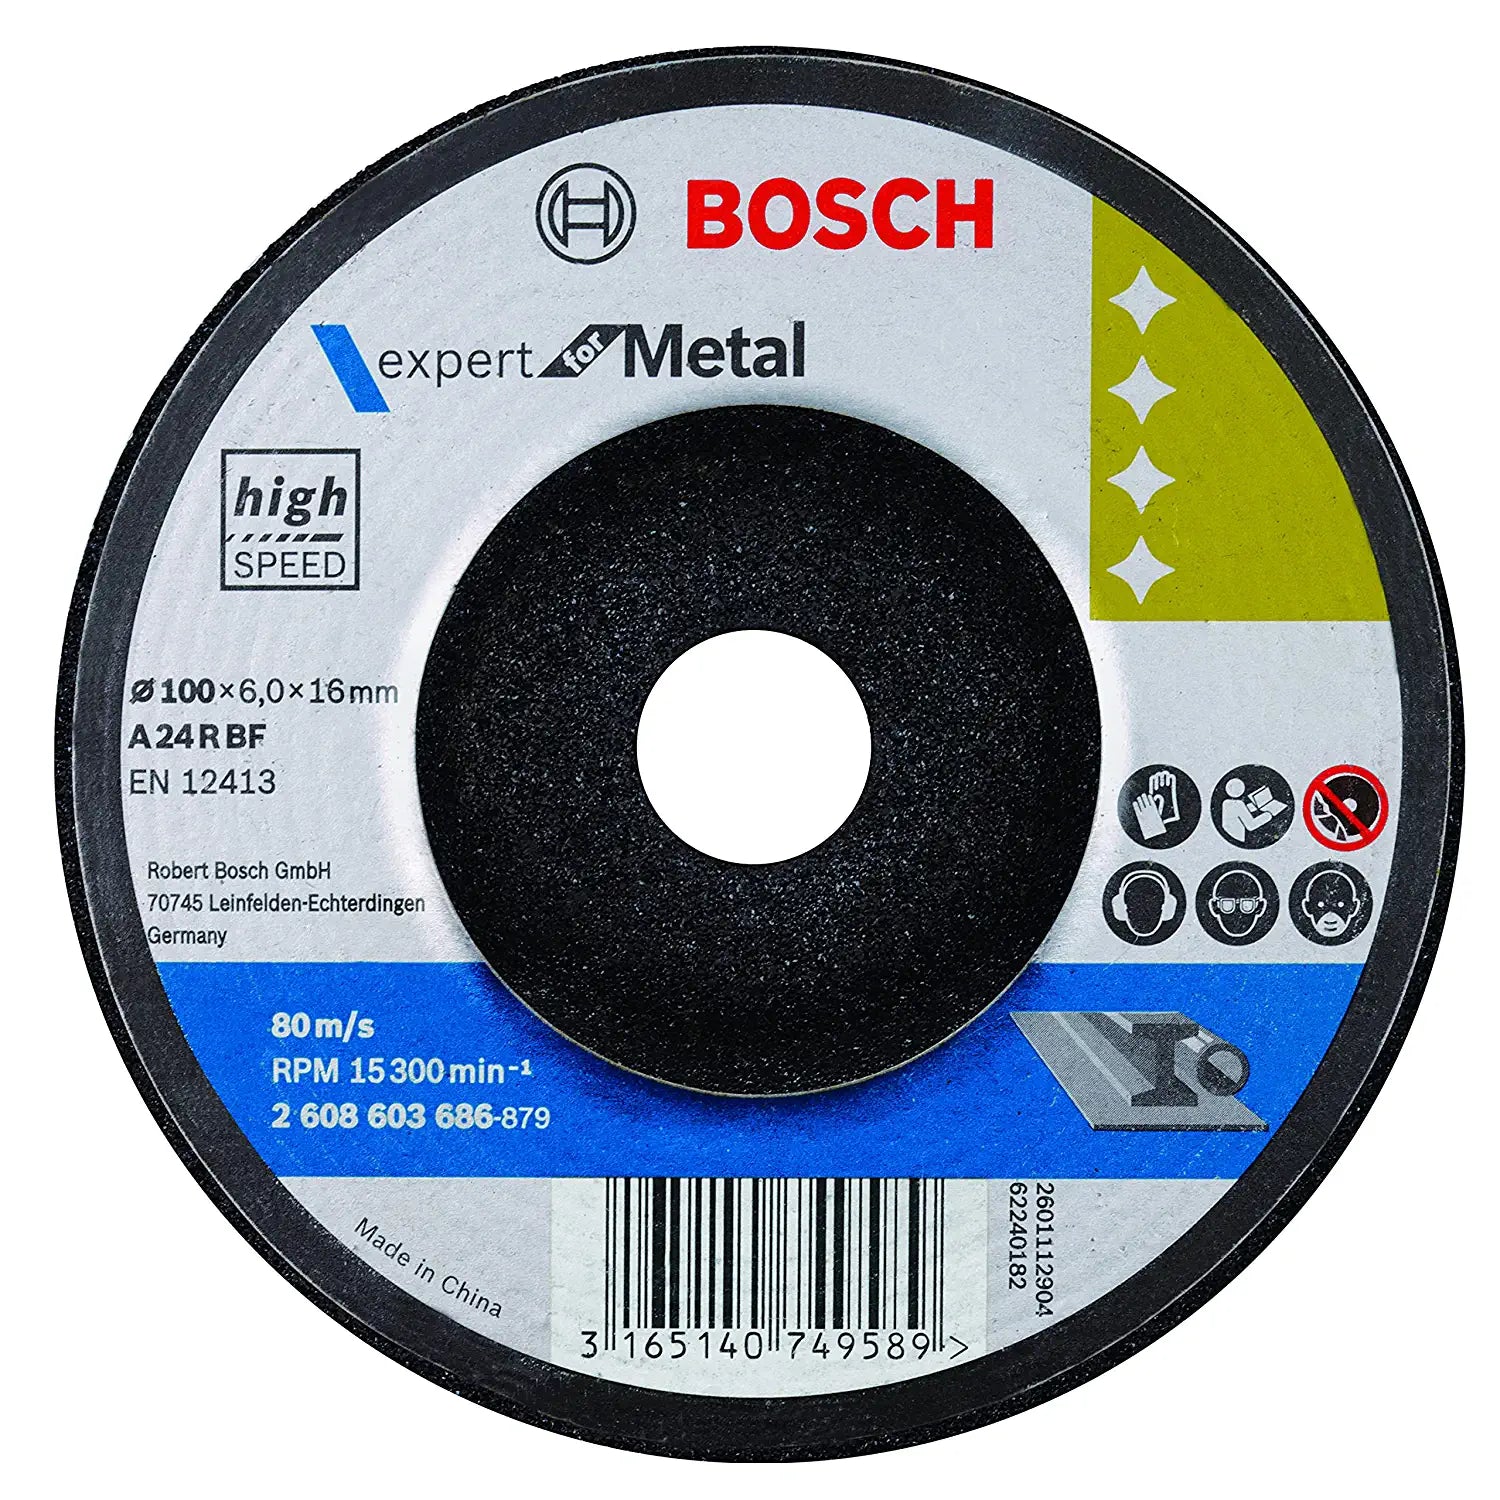 Bosch  (2608603686) A 24 R BF Grinding Wheel